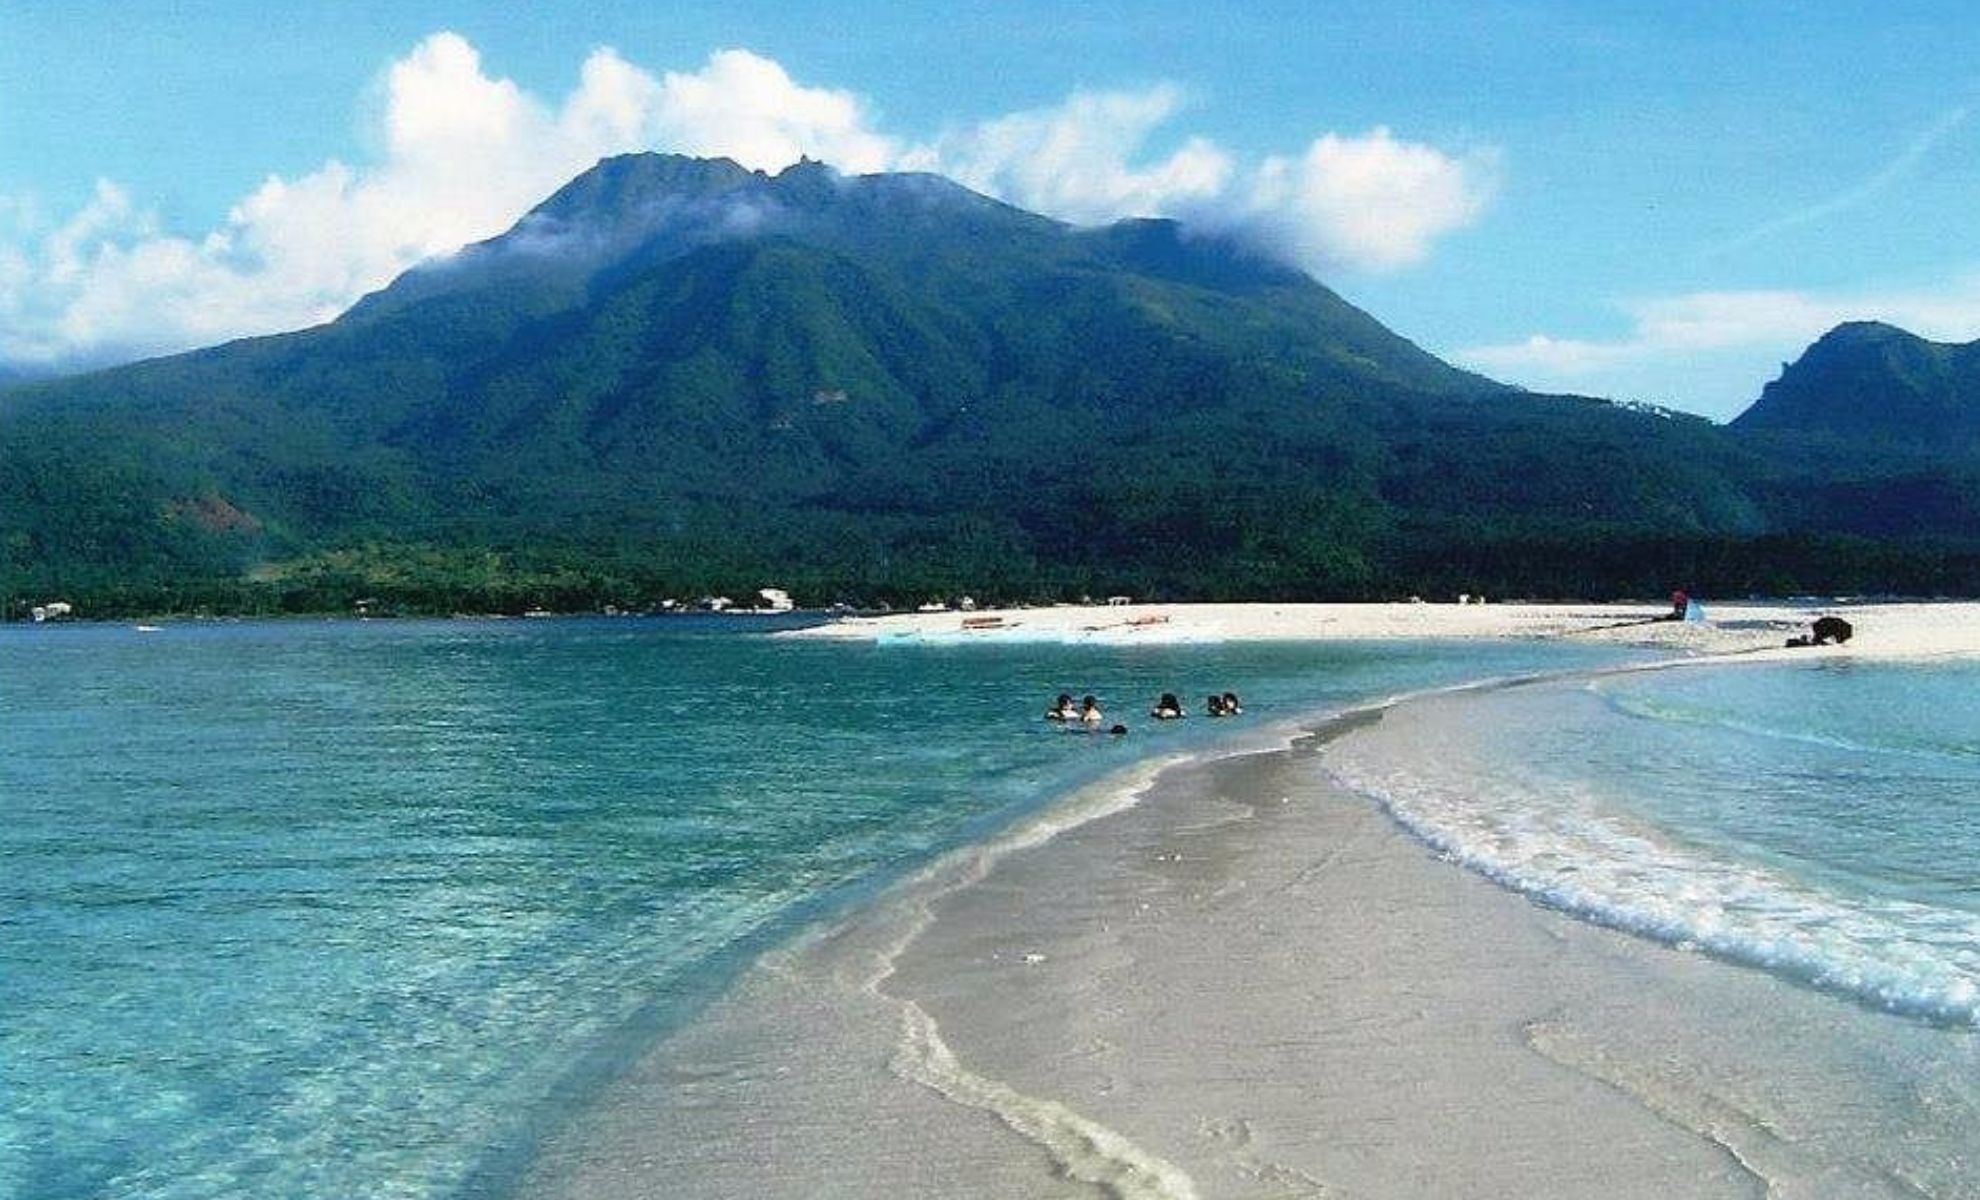 White Islande, au centre des Philippines